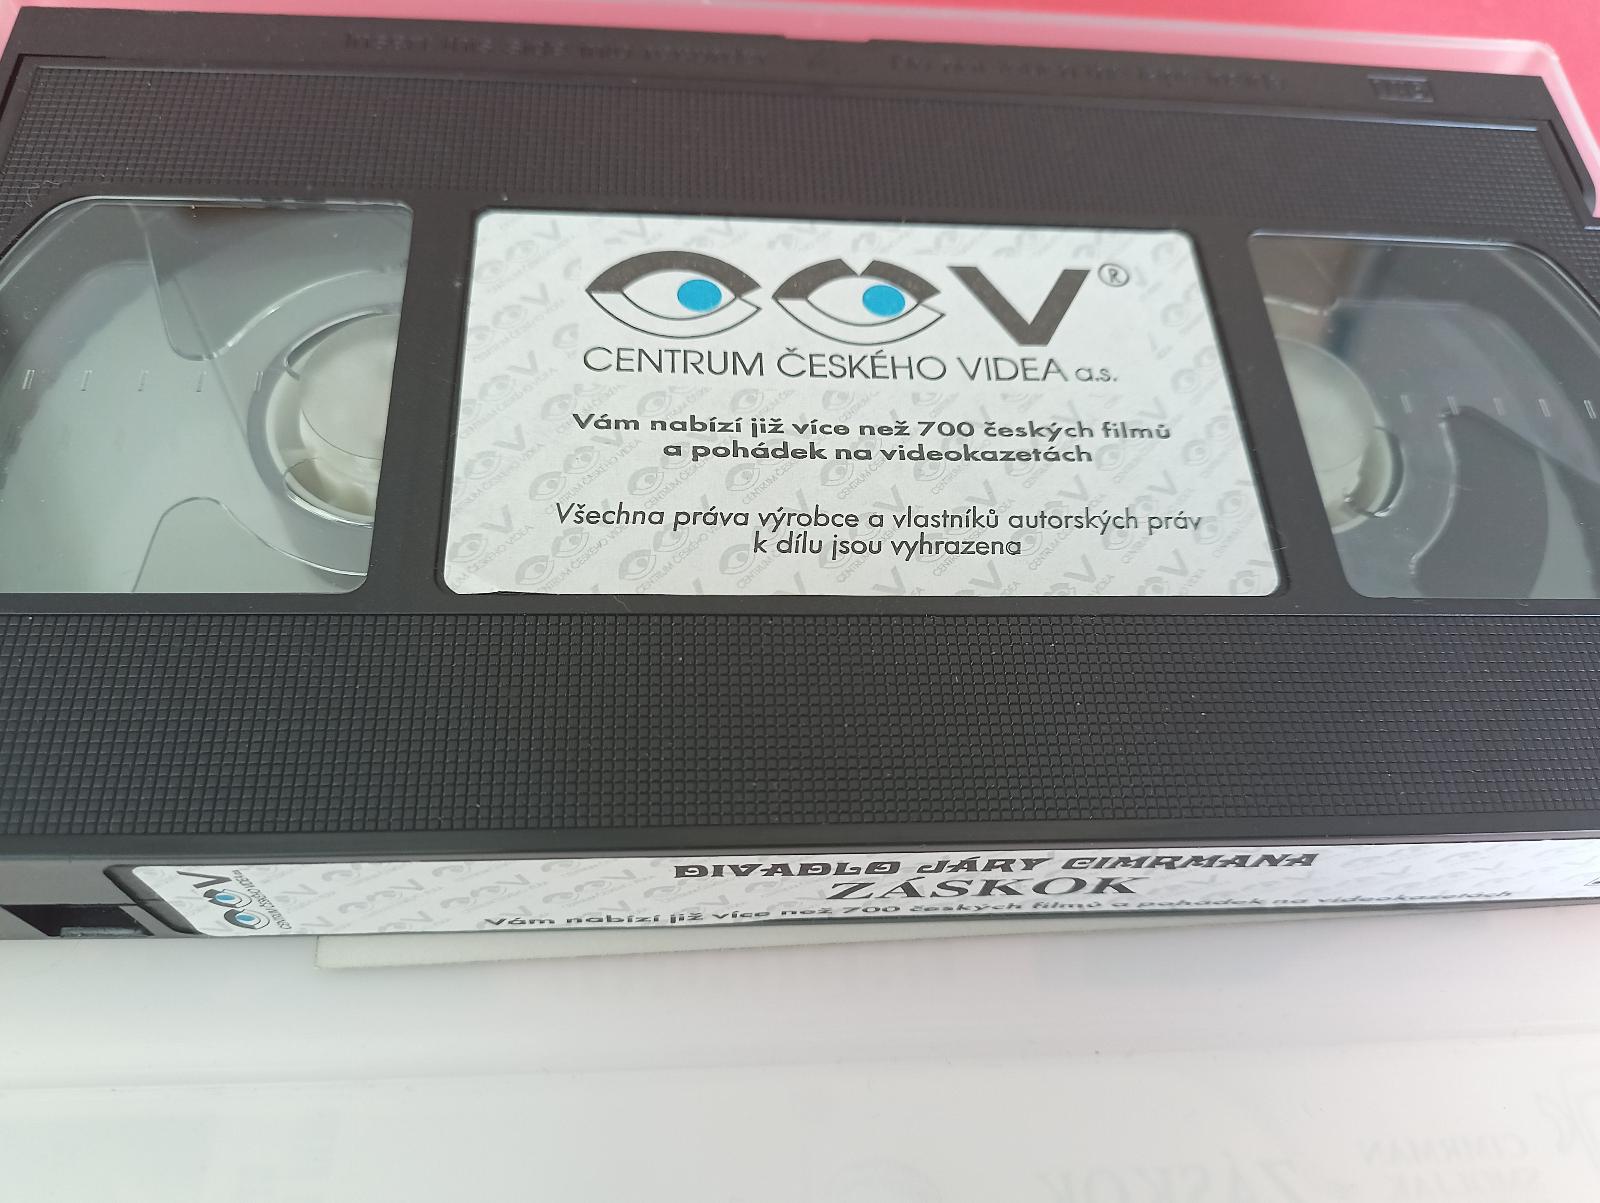 VHS Videokazeta Cimrman Svěrák Smoljak - Záskok  - Film